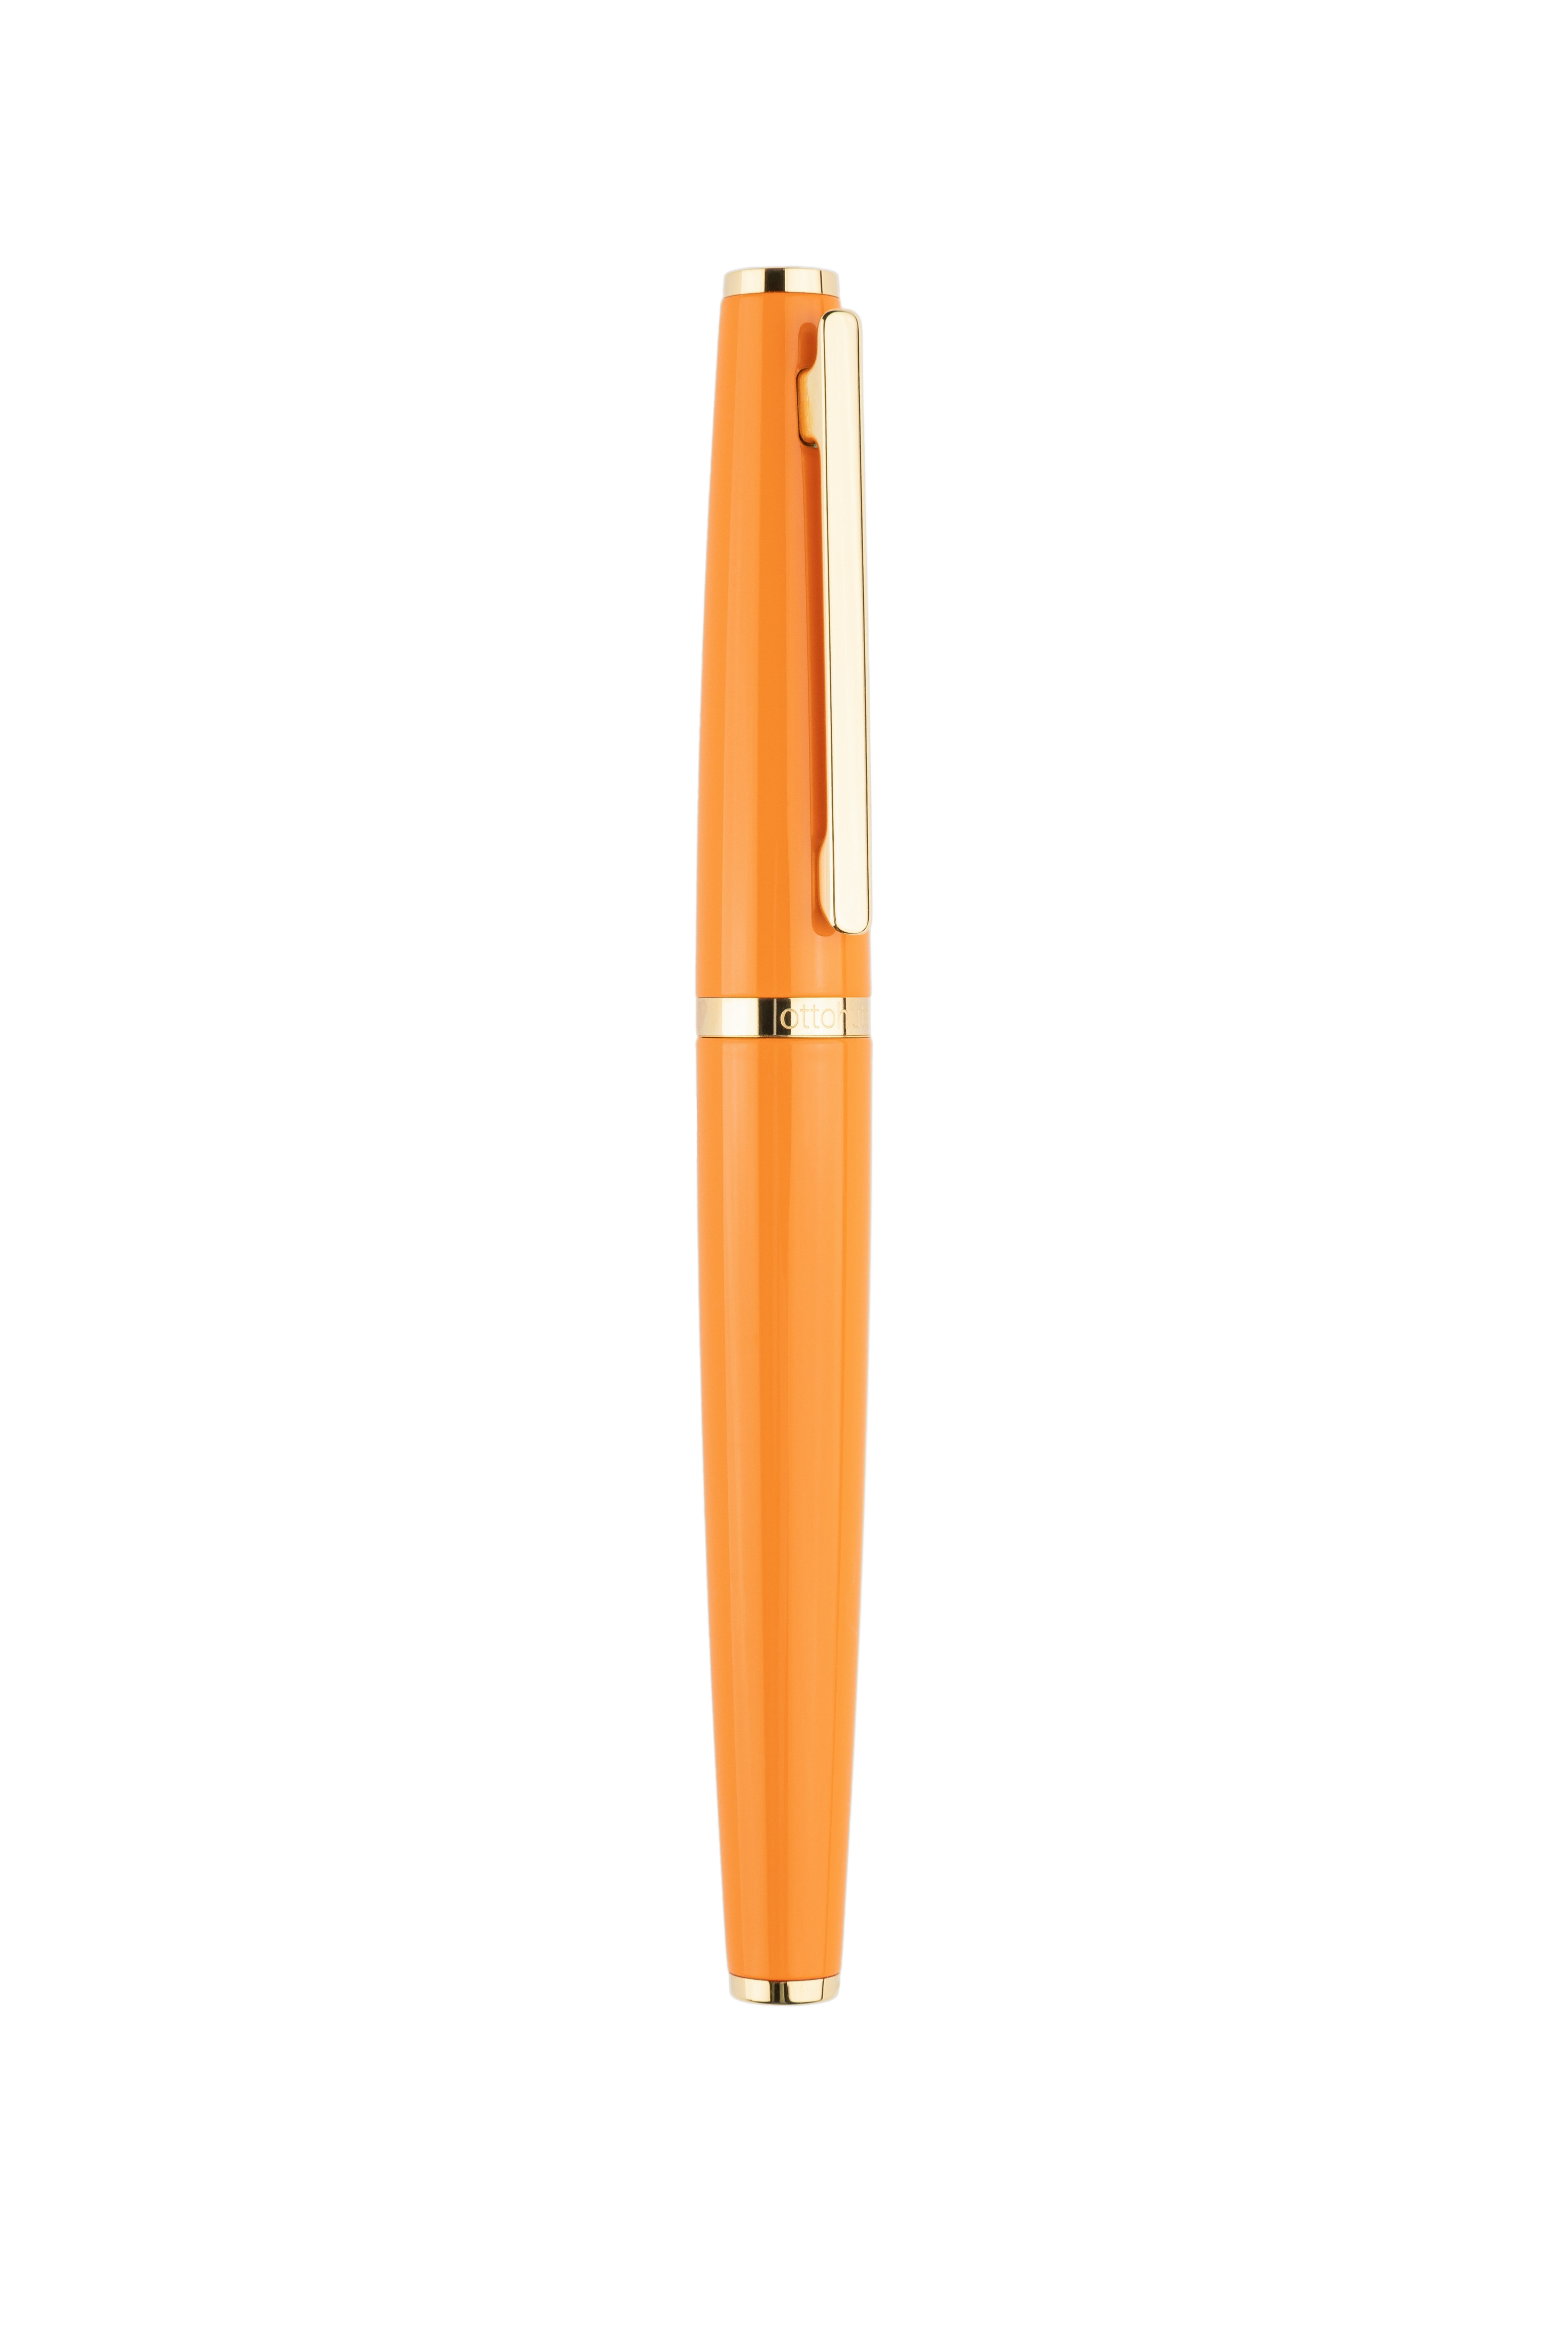 Tintenroller orange Gelbgold-vergoldet - Design 06